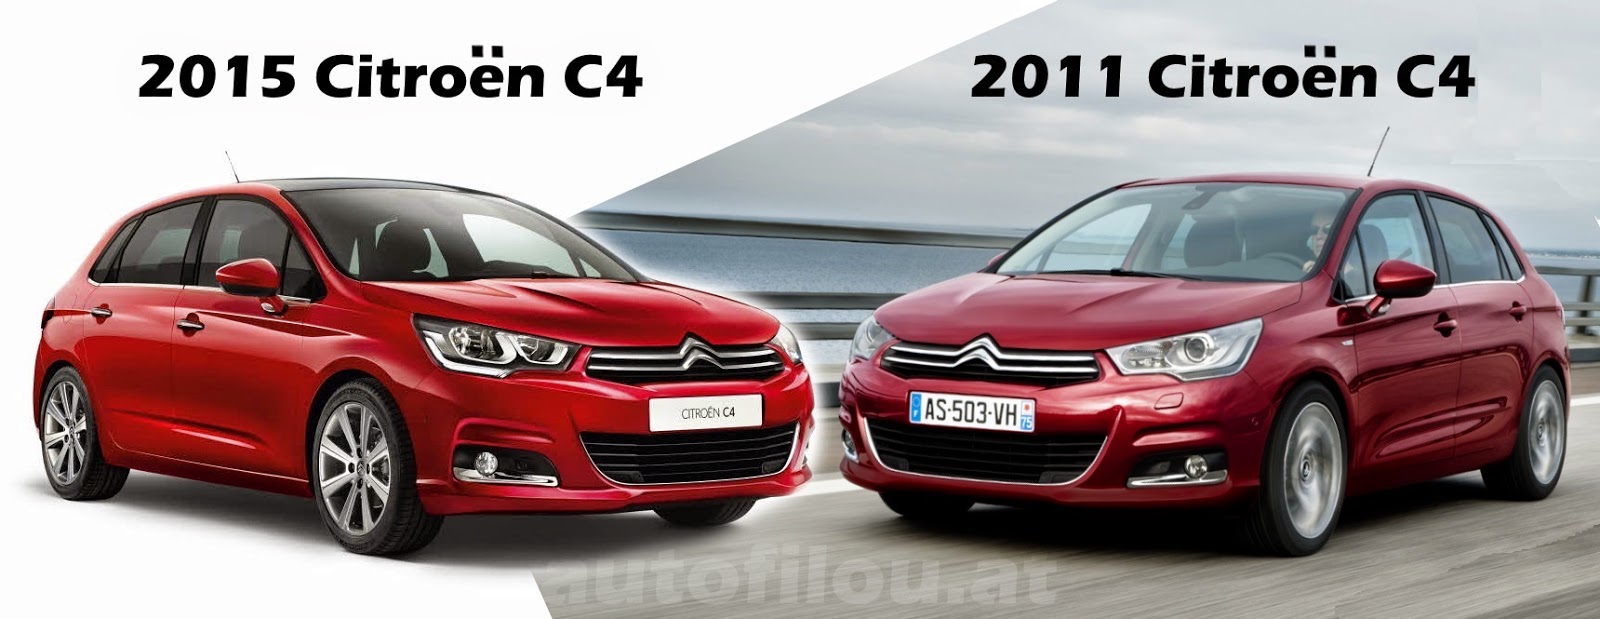 2015 vs. 2011 Citroën C4 | Illustration © Raphael Gürth/autofilou.at